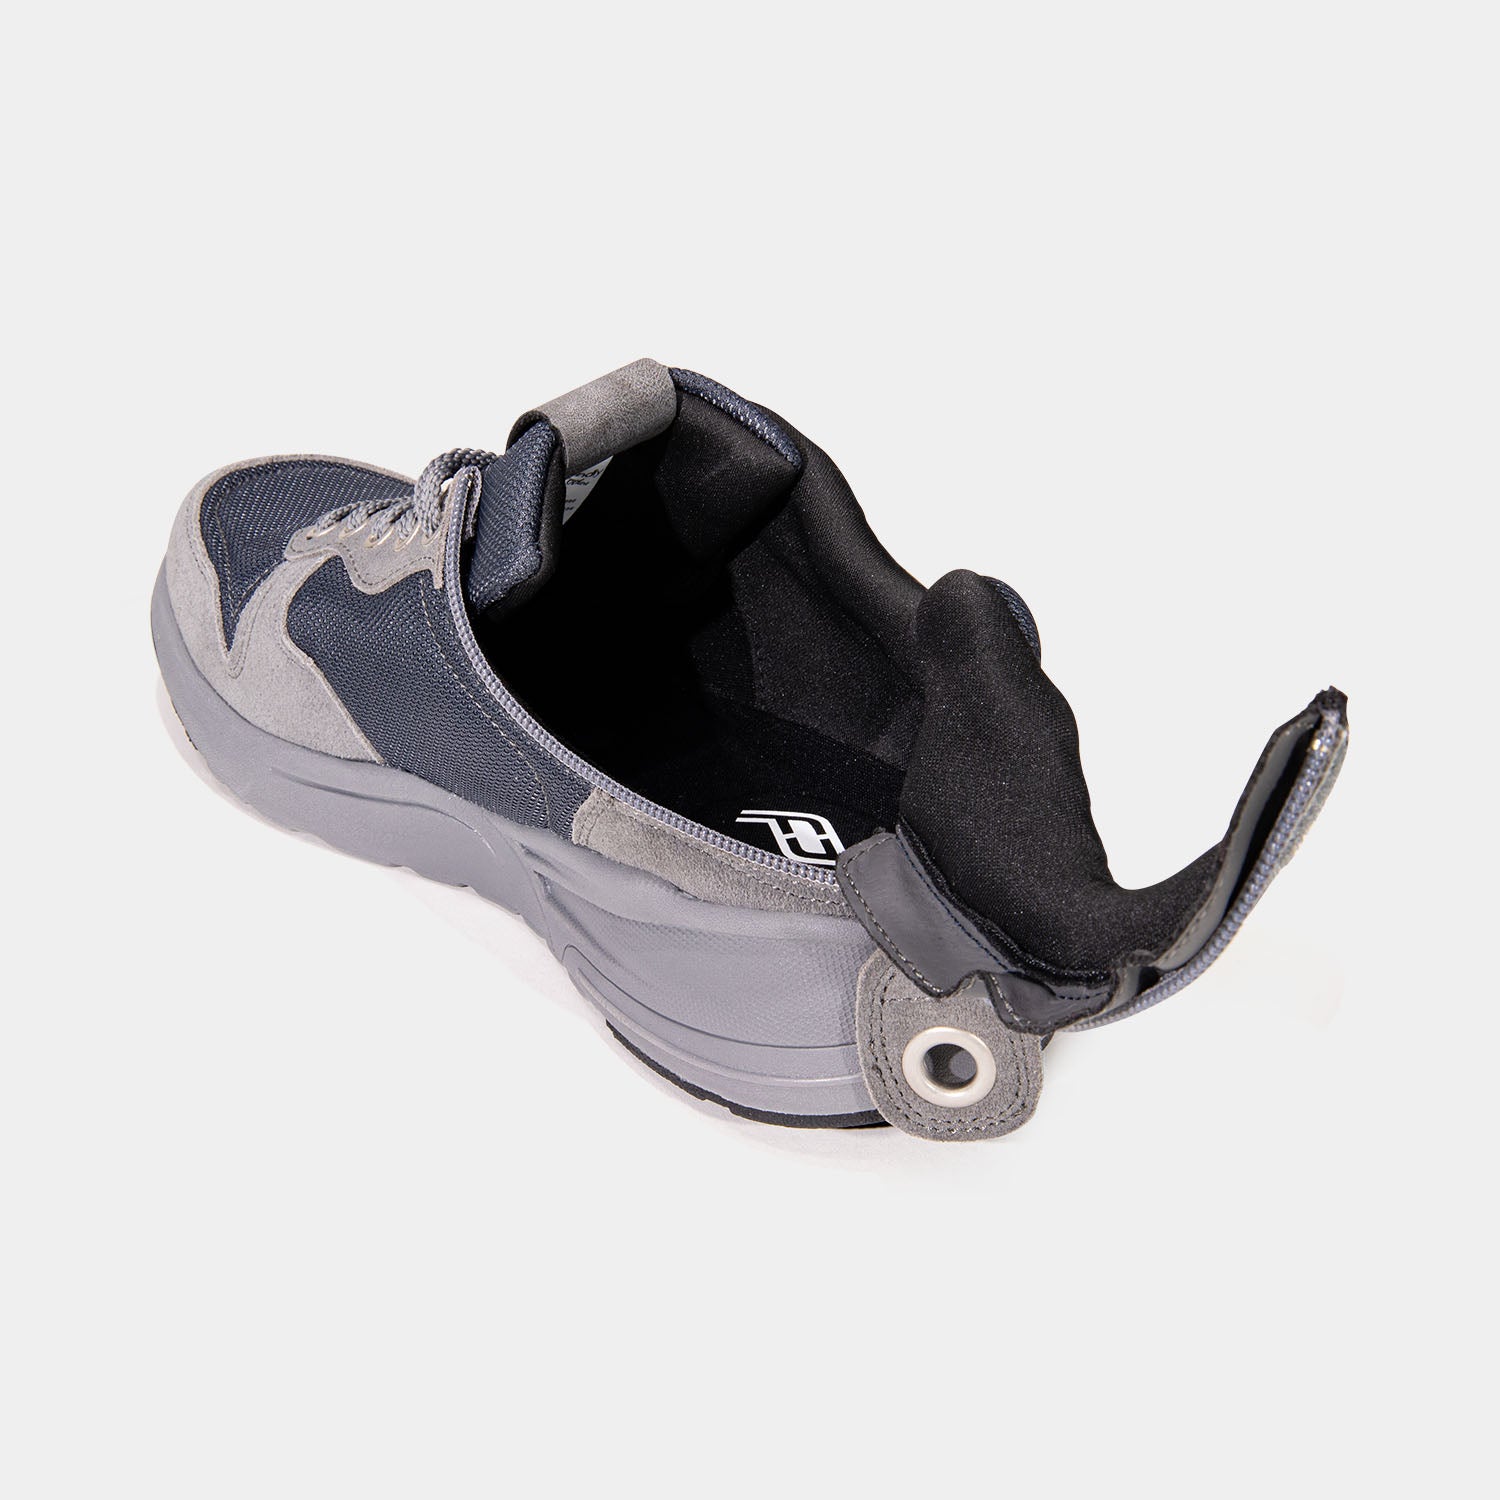 Medium grey mens shoe with unzipped rear zipper access and black interior.